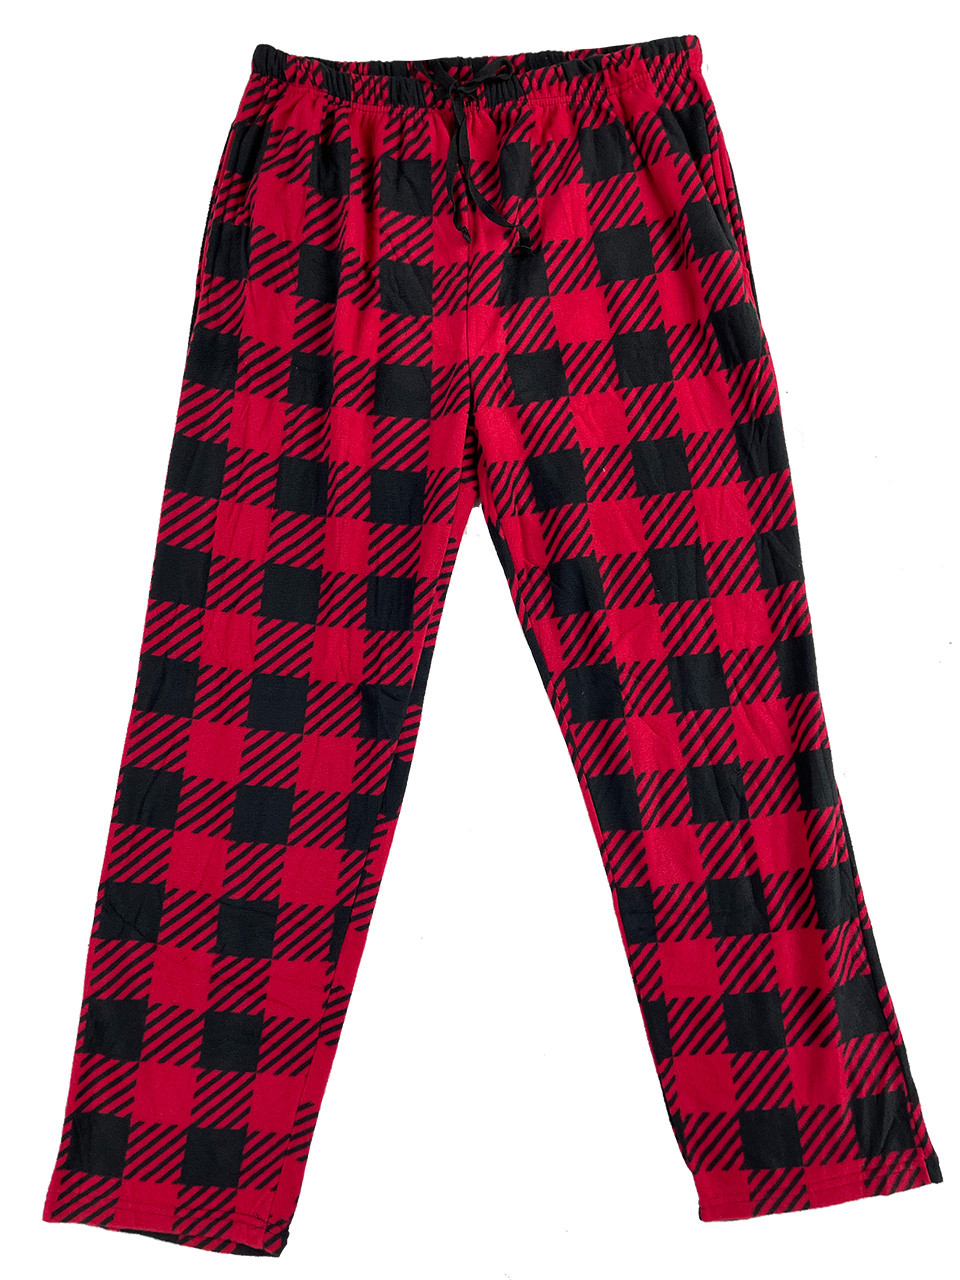 Men's Plush Sleep Pants: Red Buffalo Plaid Pants, Relaxed Fit